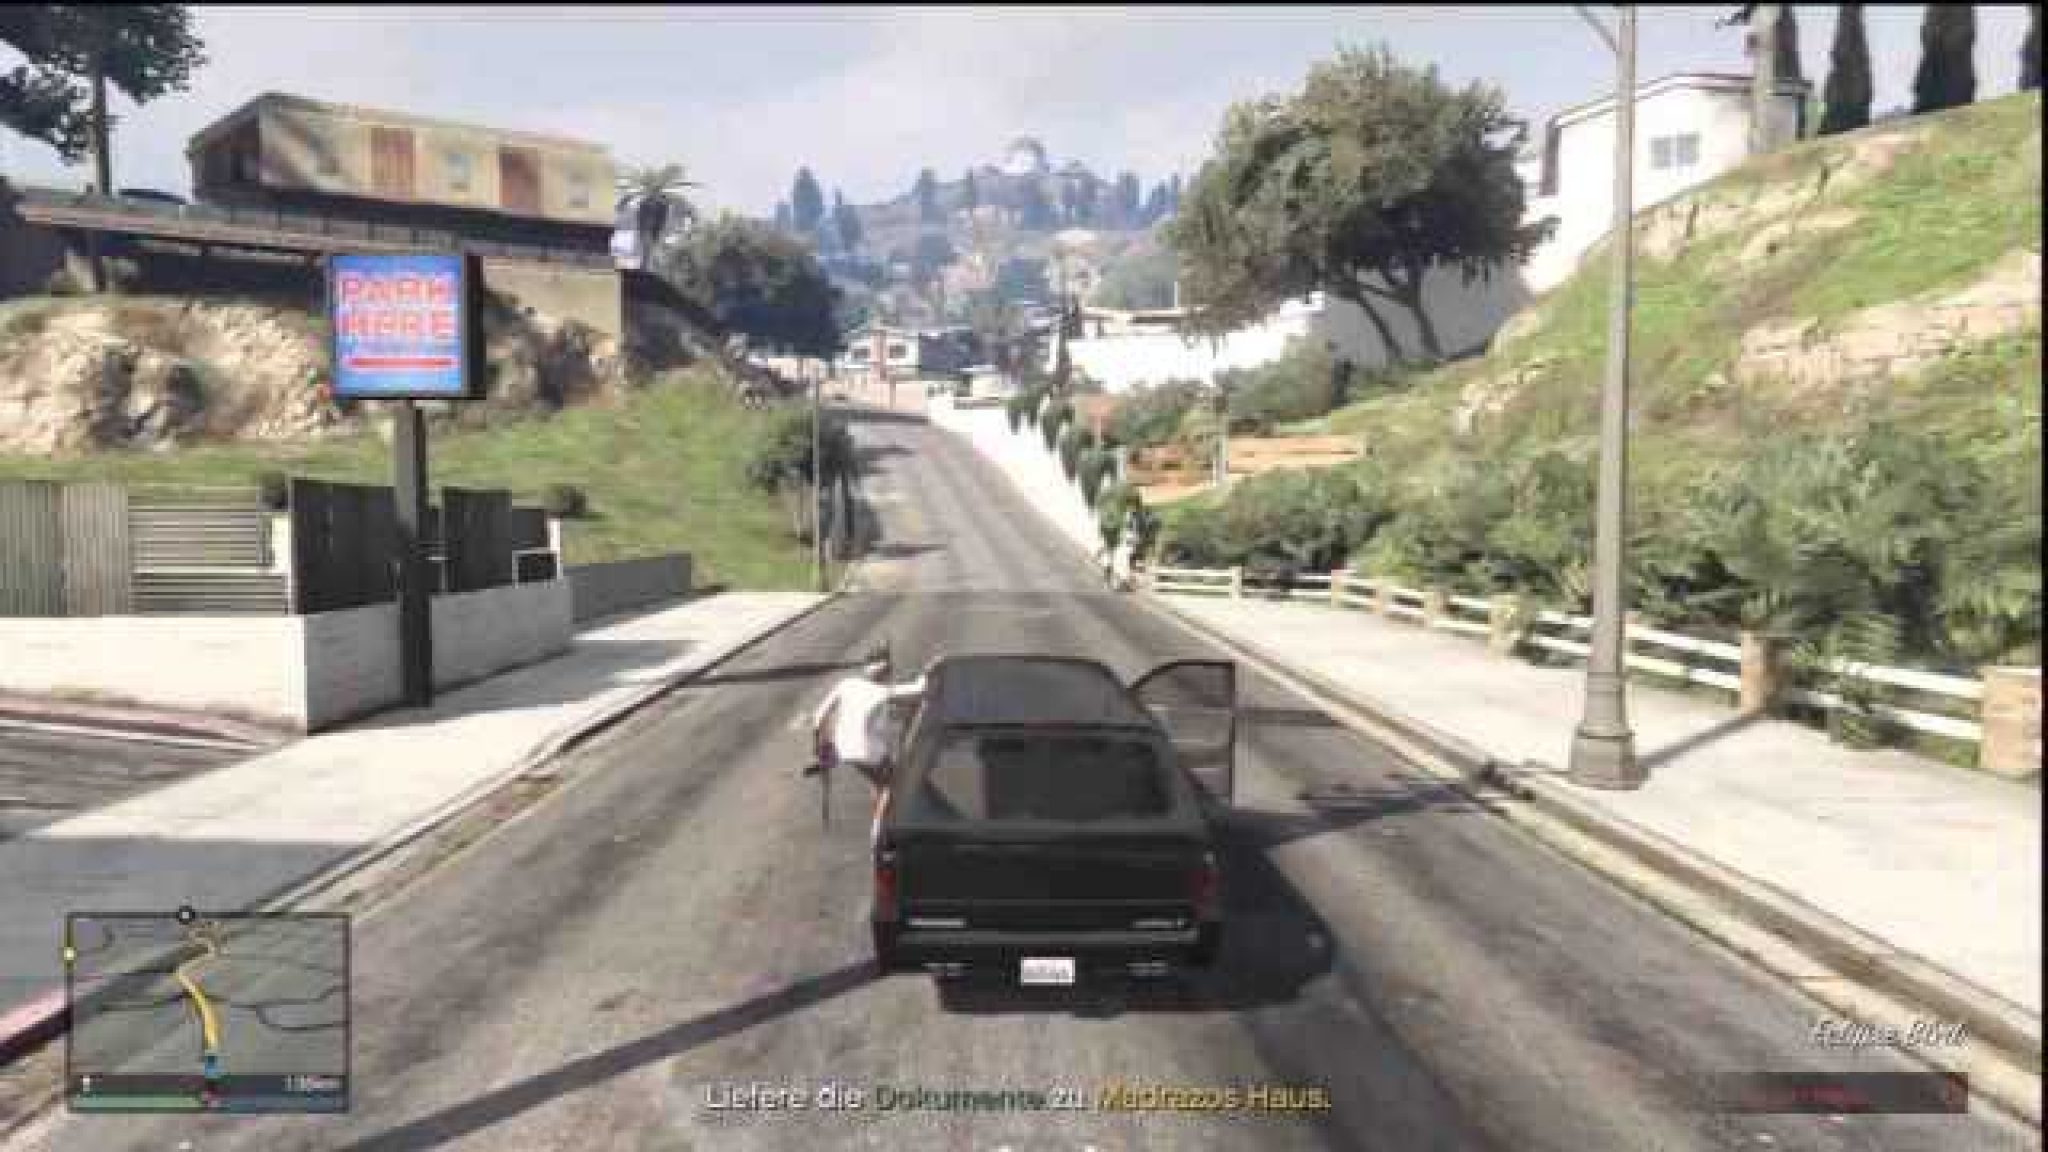 Grand Theft Auto 5 free instals